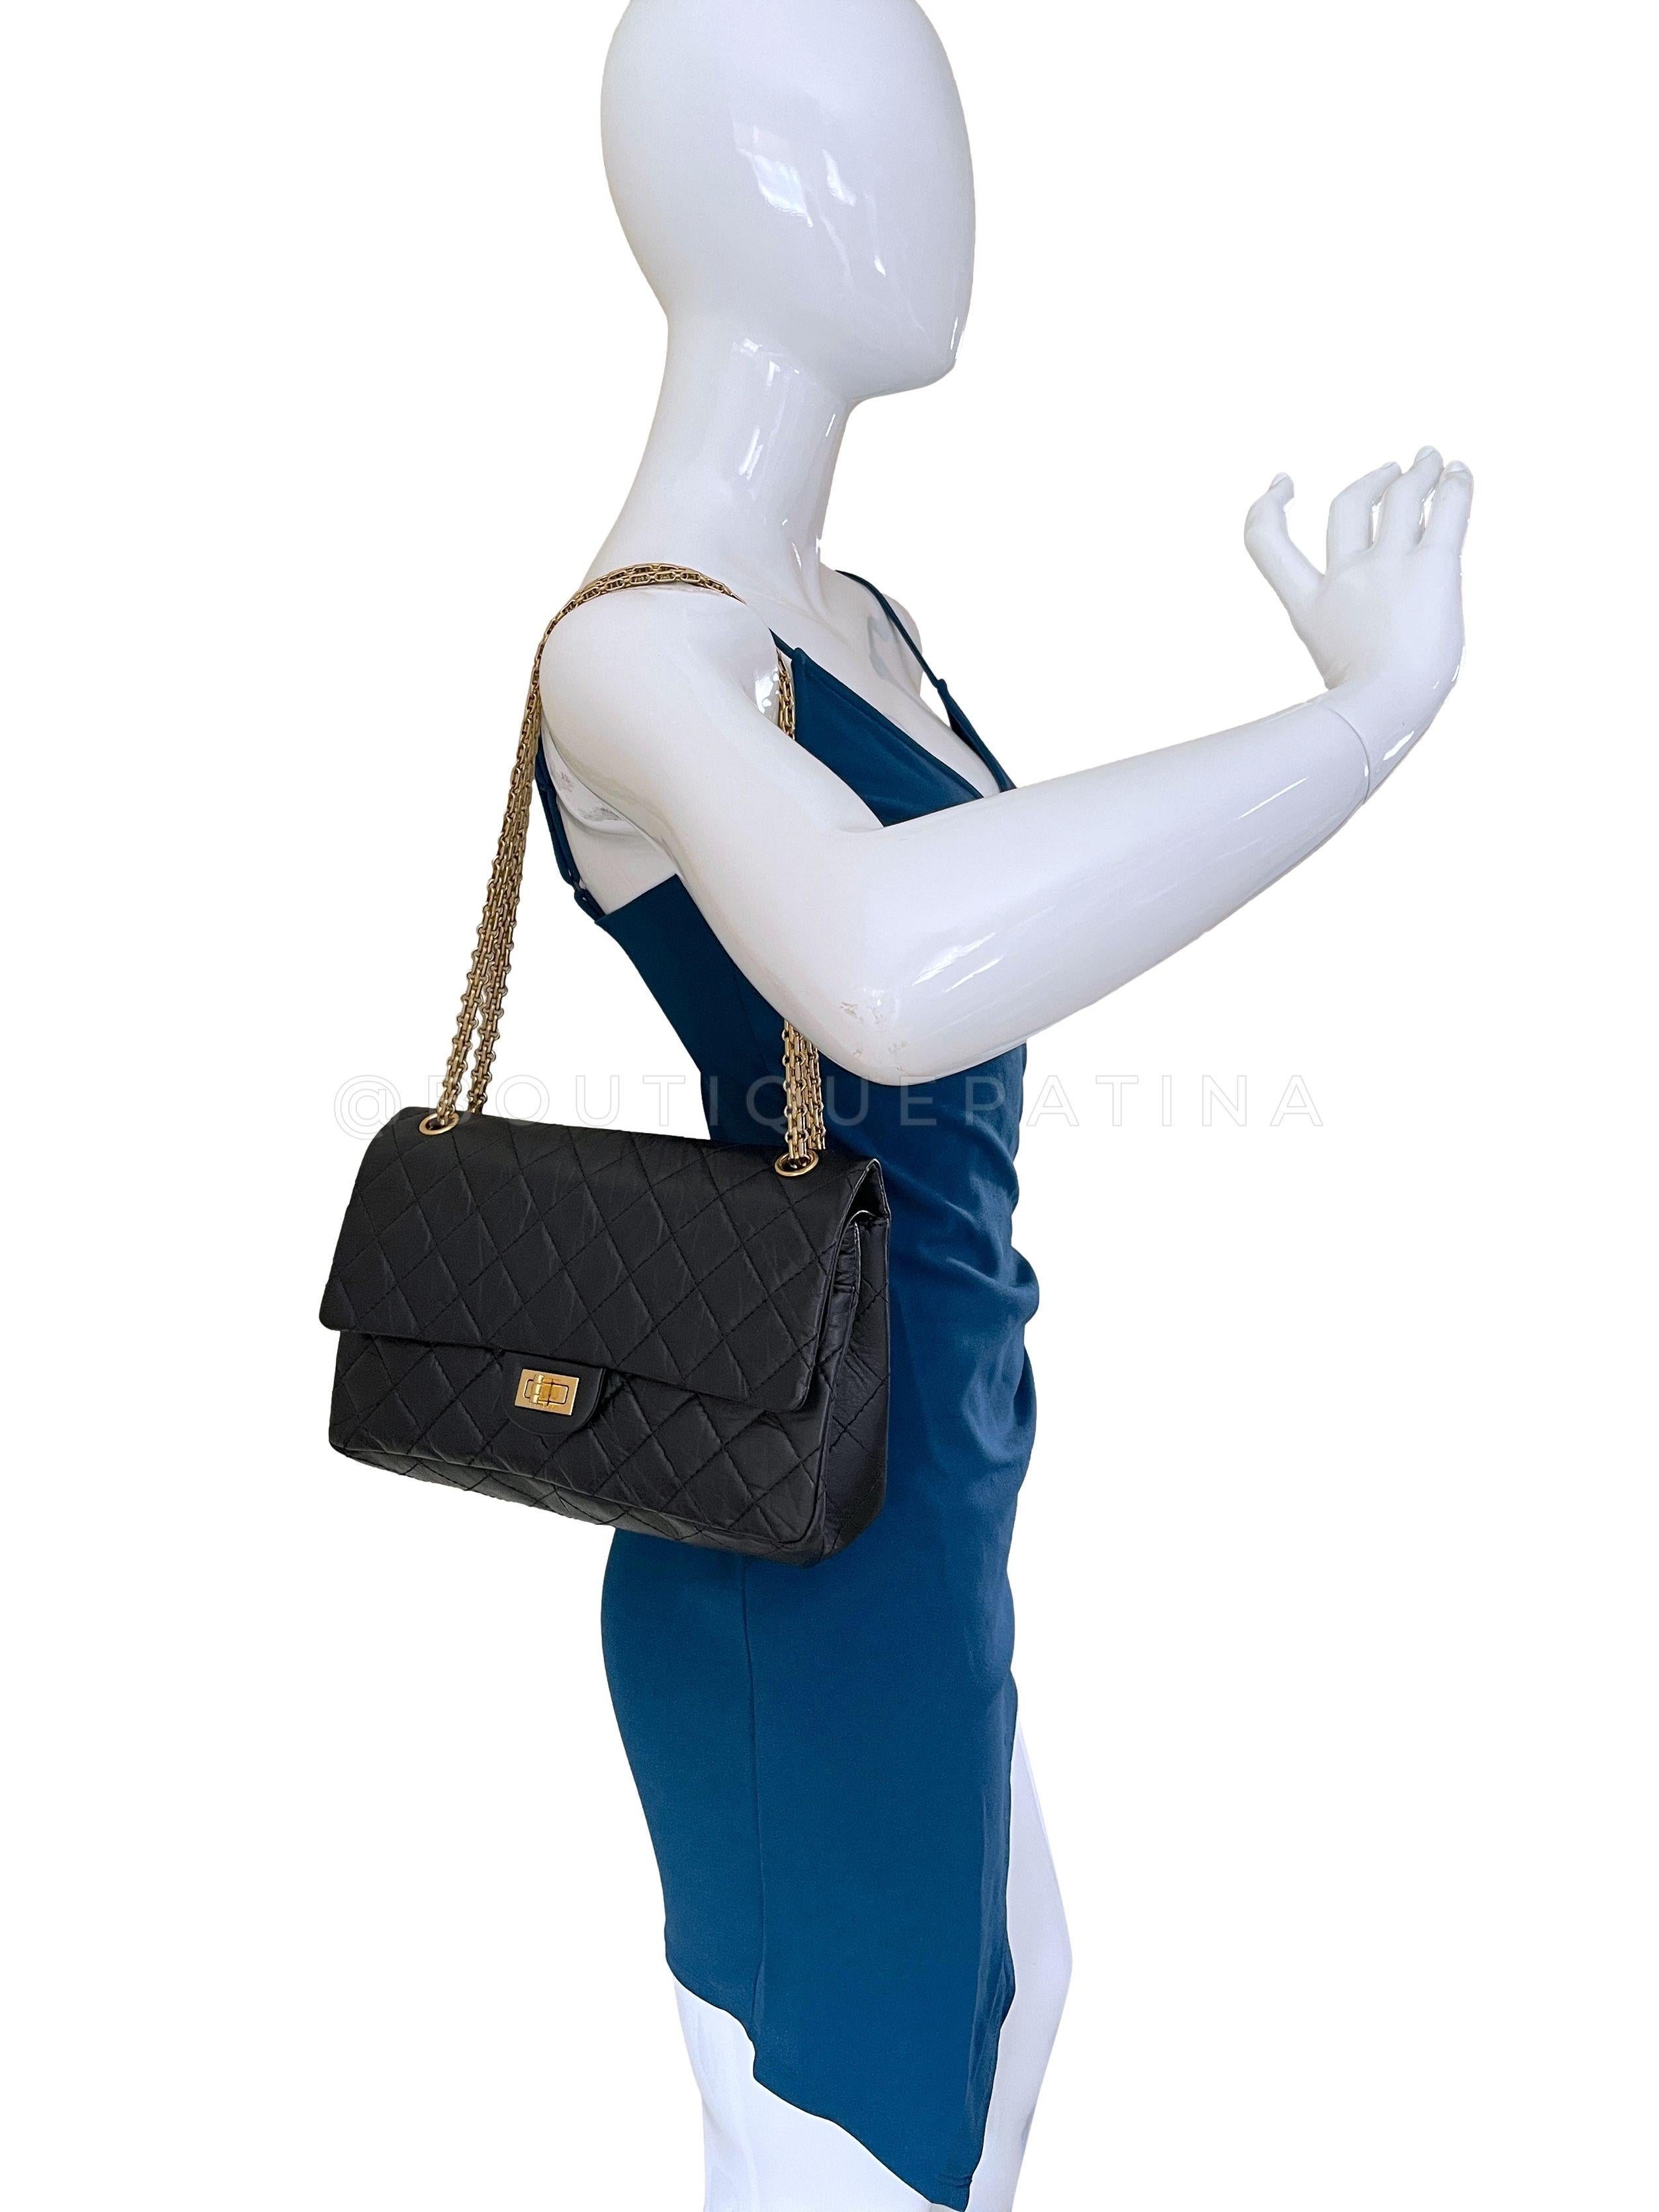 Chanel Black Aged Calfskin Reissue Medium 226 2.55 Flap Bag GHW 66864 For Sale 10